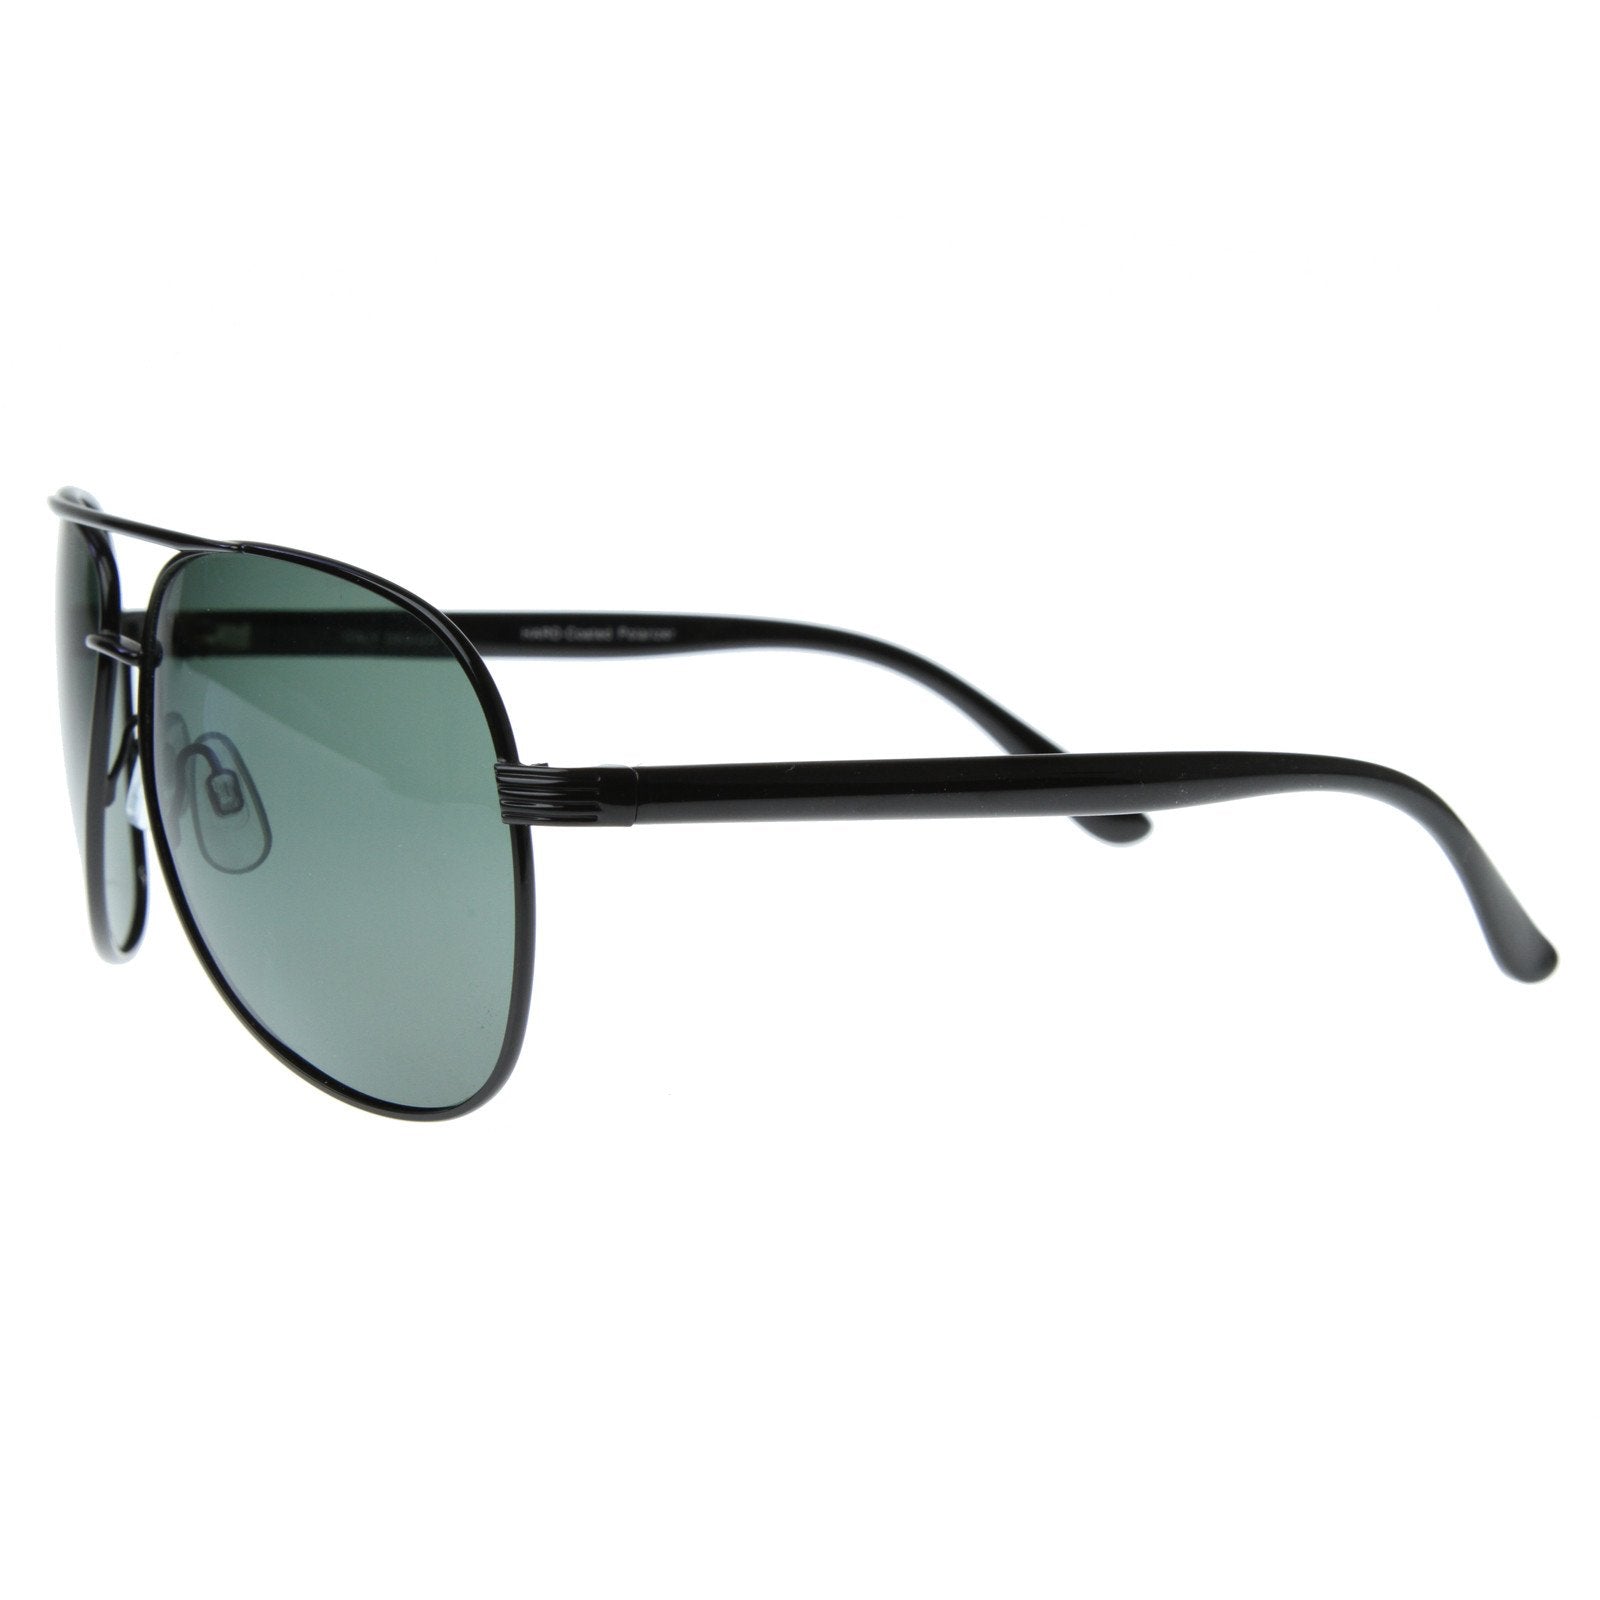  Polarized Sunglasses Faded Men's Premium Classic